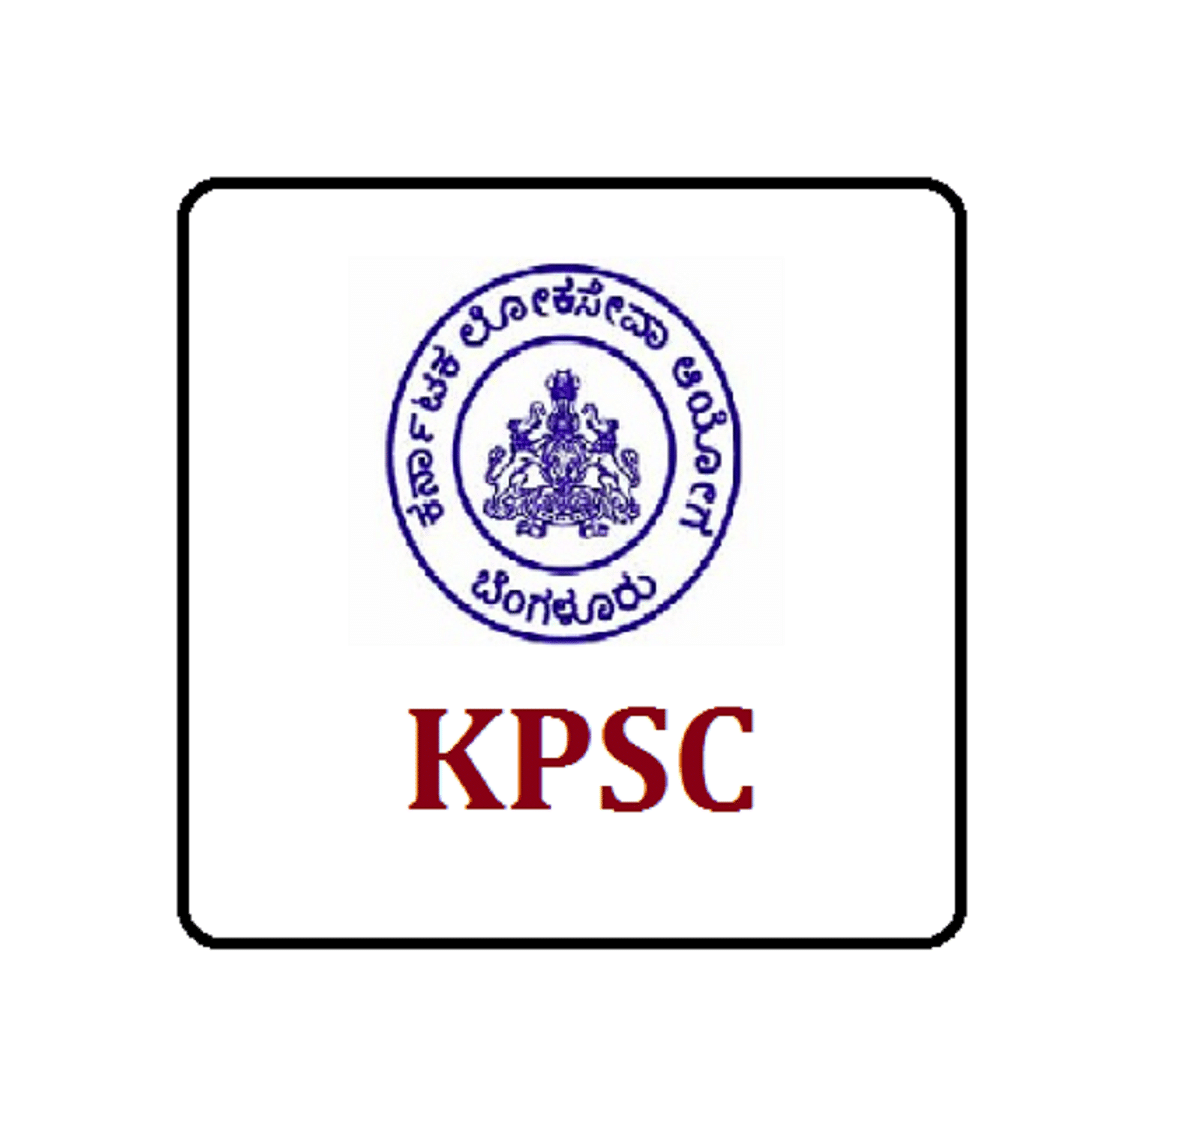 KPSC Recruitment 2020: Vacancy for 1279 Jr Assistant/ Second Division Assistant Posts